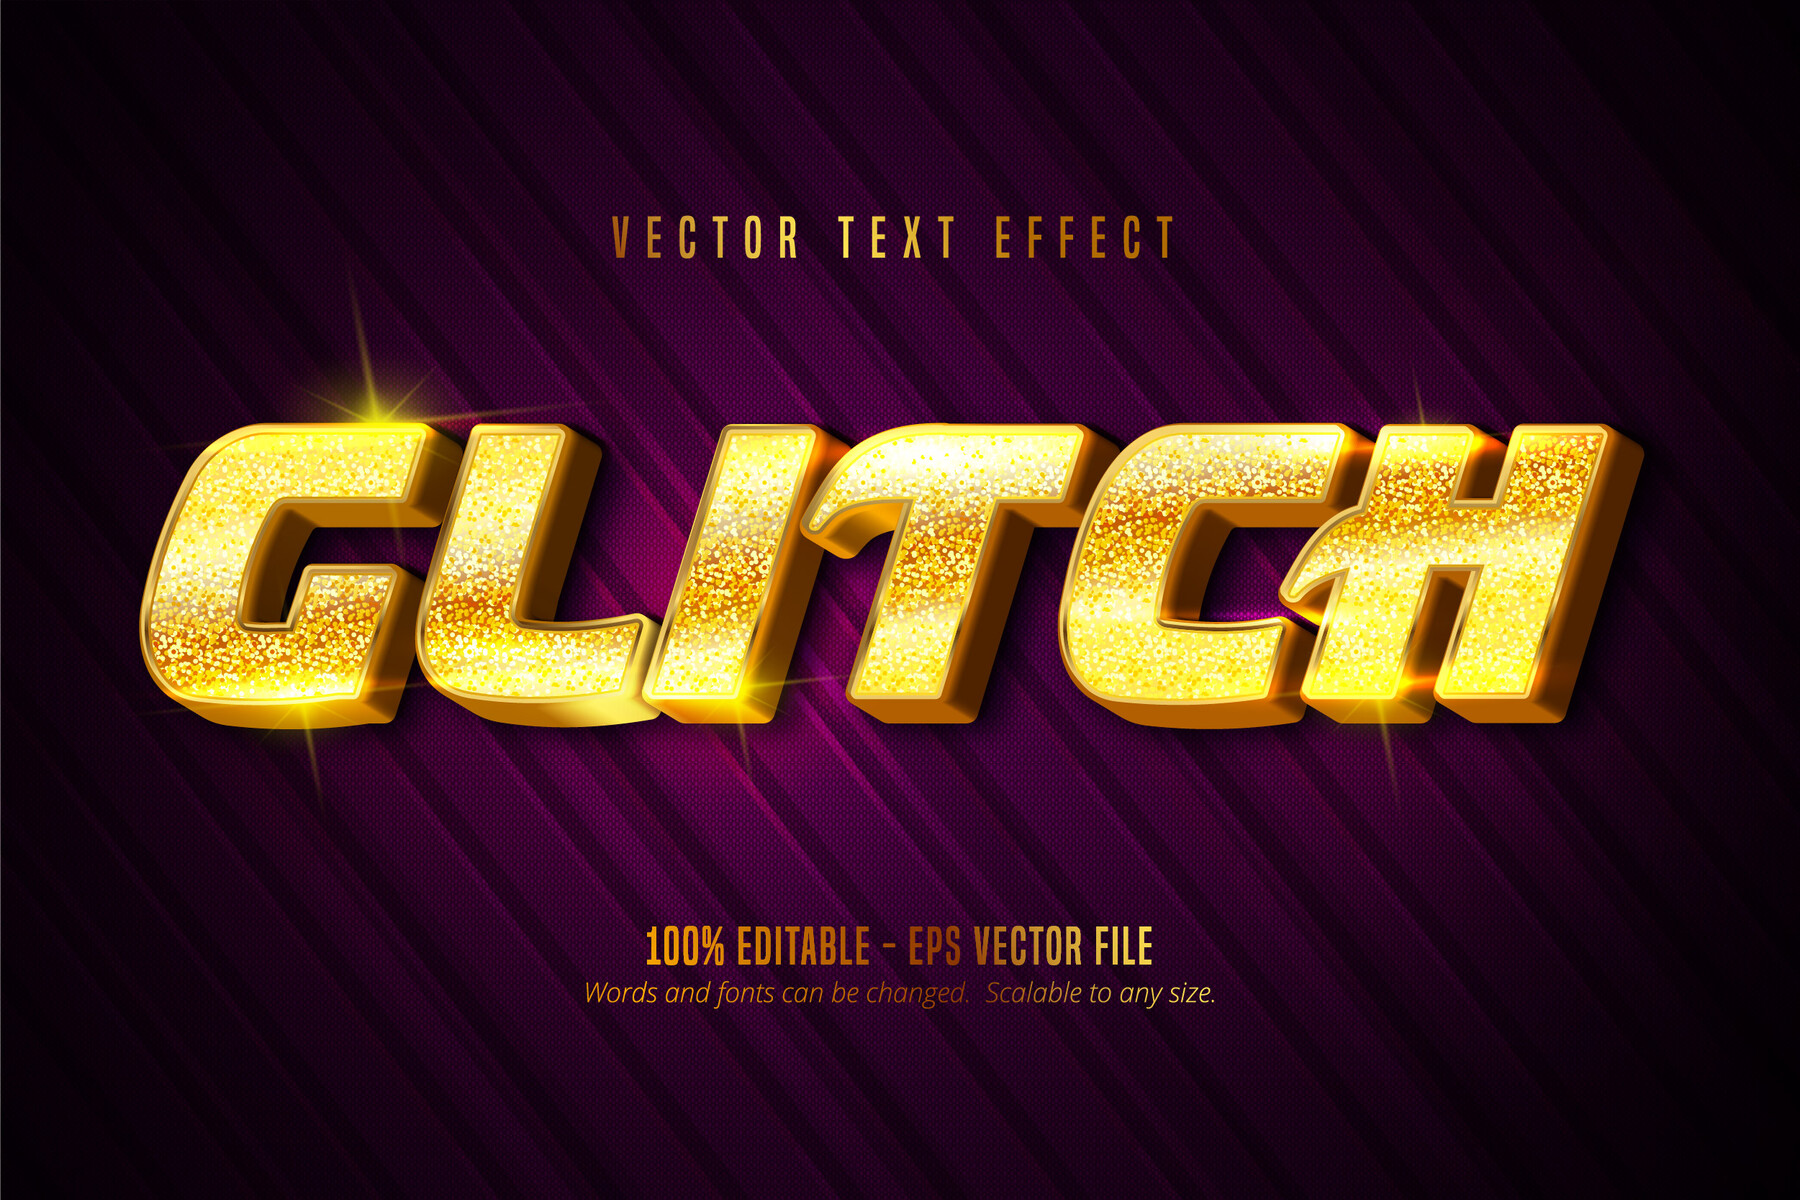 100+] Glitch Effect Backgrounds